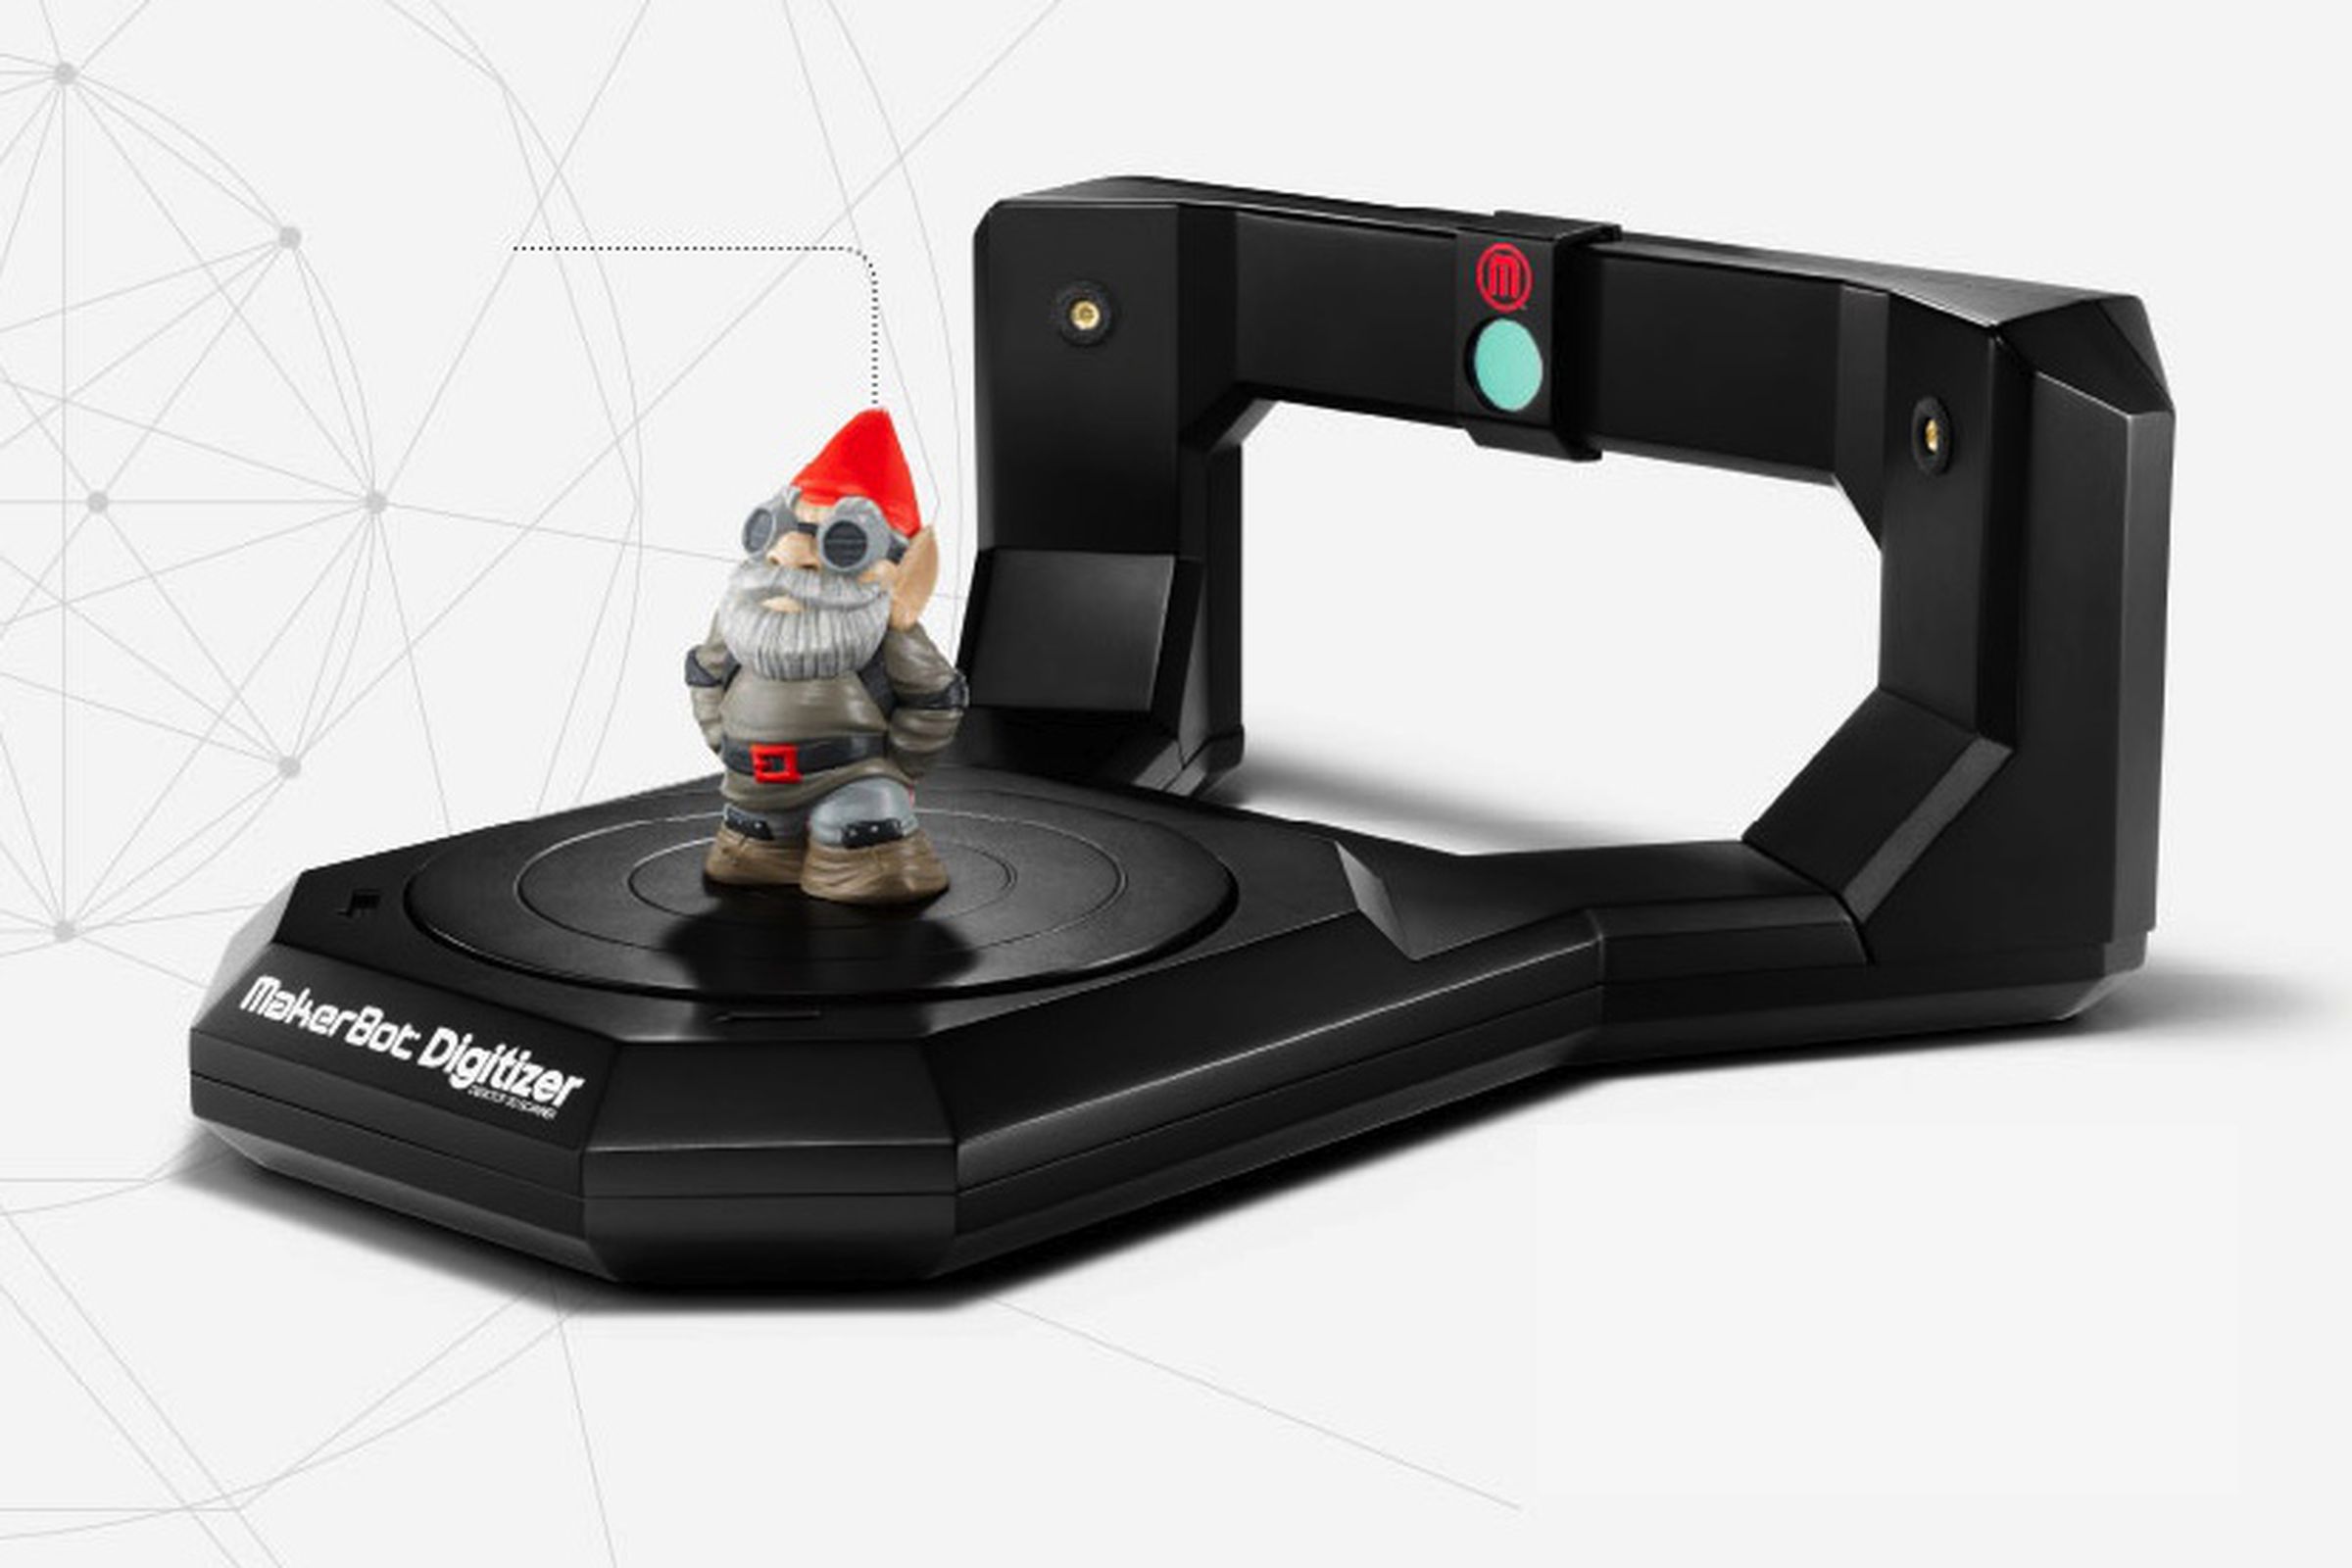 Makerbot Digitizer Gnome